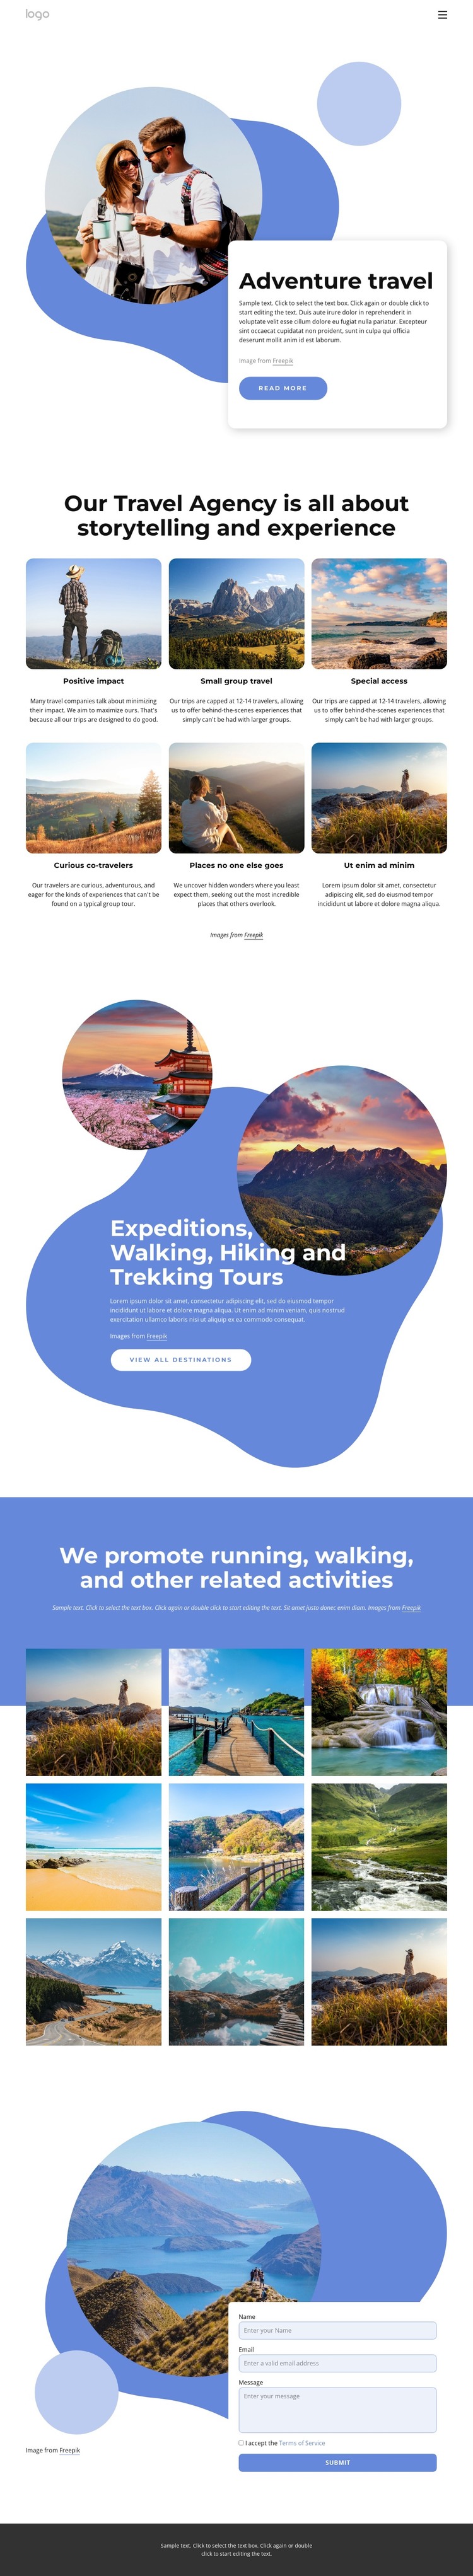 Agency specializing in luxury adventure travel Web Design